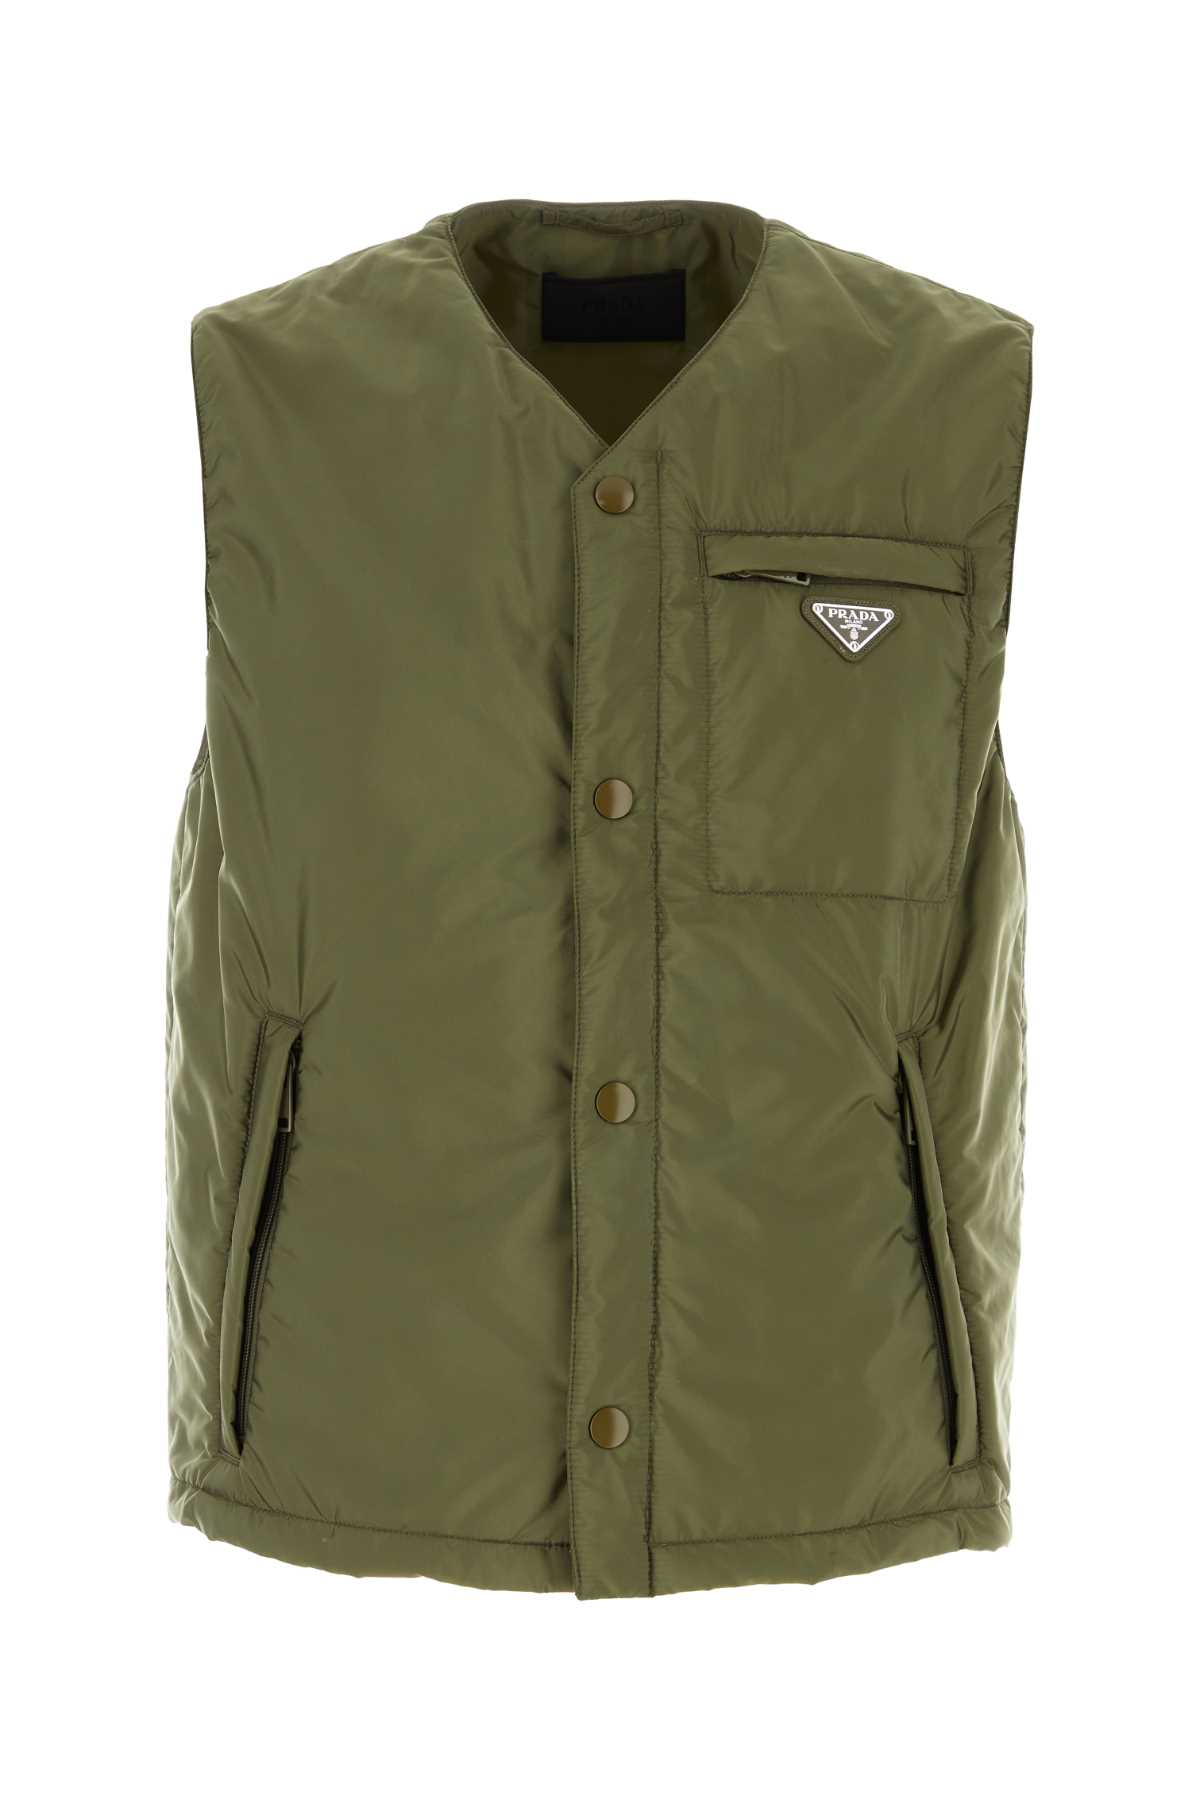 Prada Army Green Nylon Sleeveless Padded Jacket